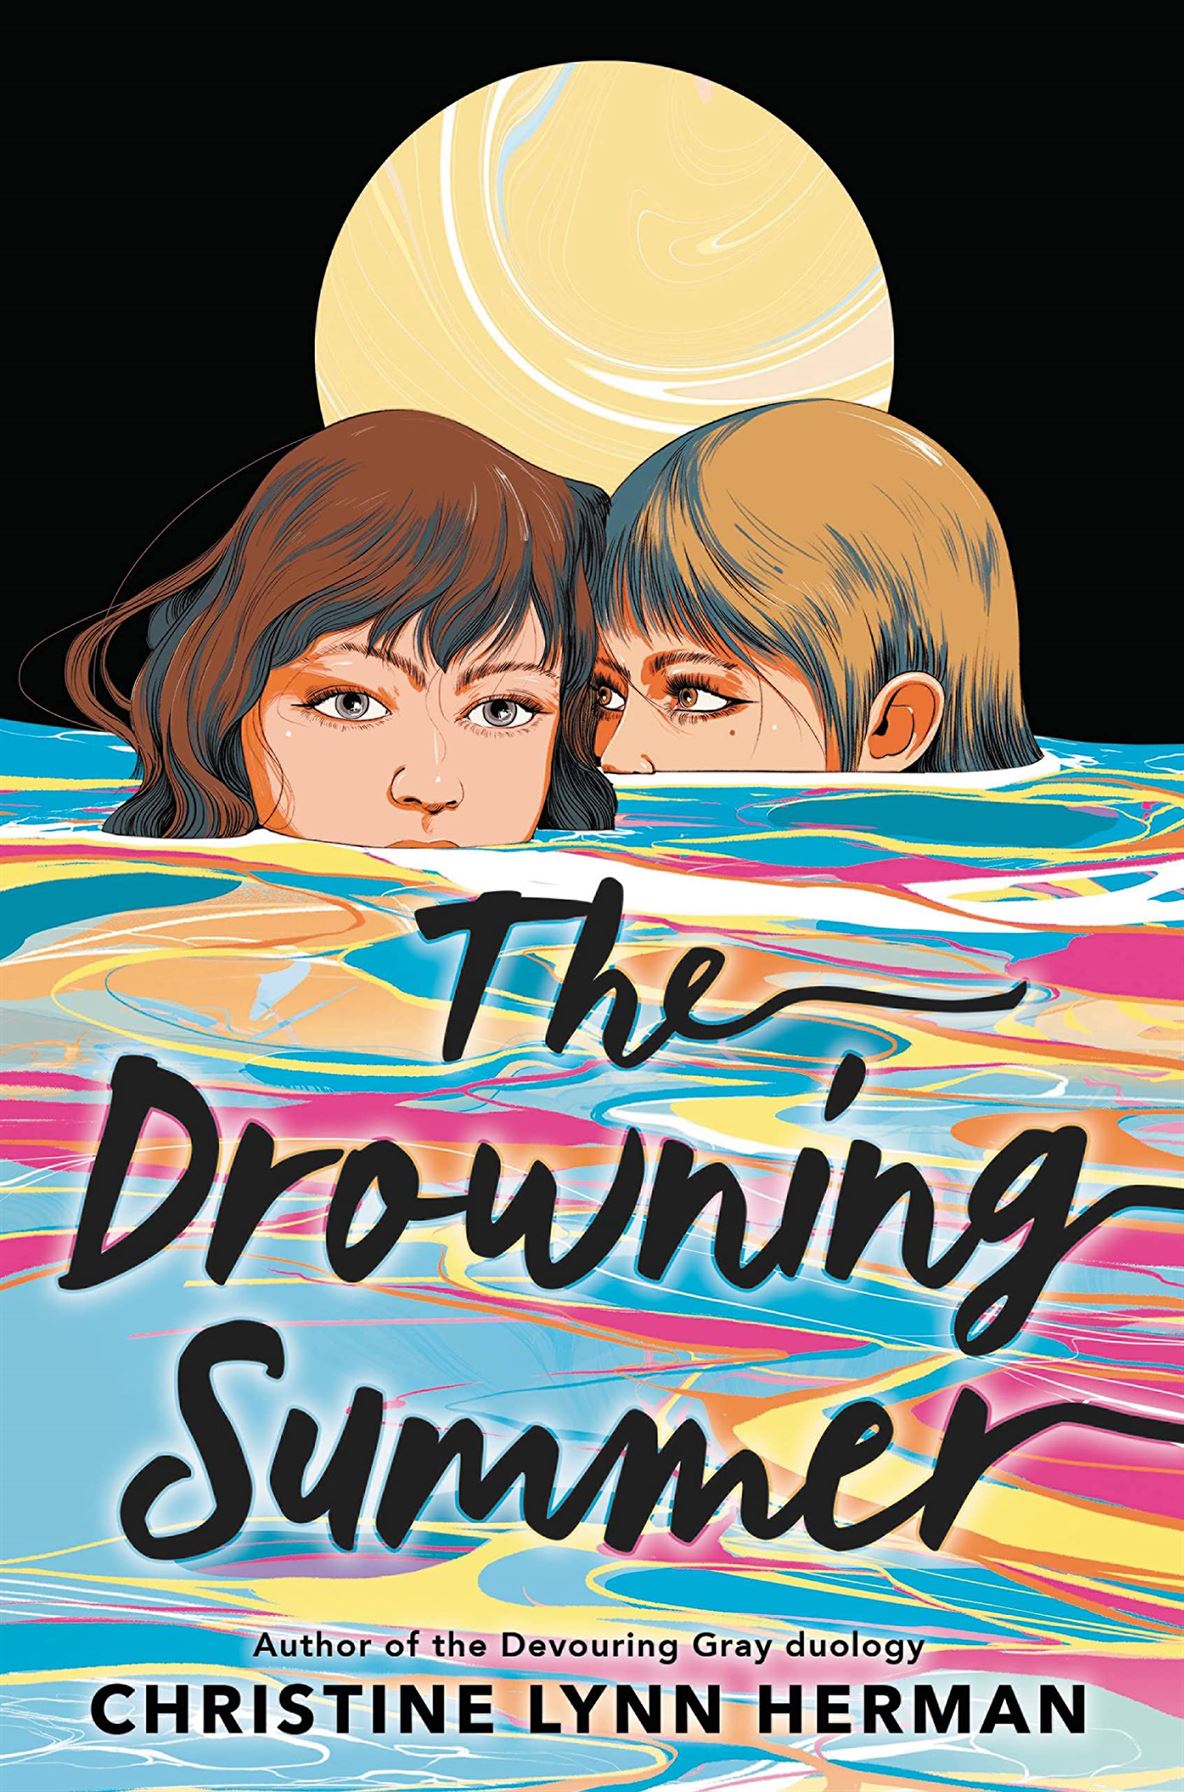 Cover for "The Drowning Summer" by Christine Lynn Herman Photo Courtesy of Karina Granda and Patrick Hulse